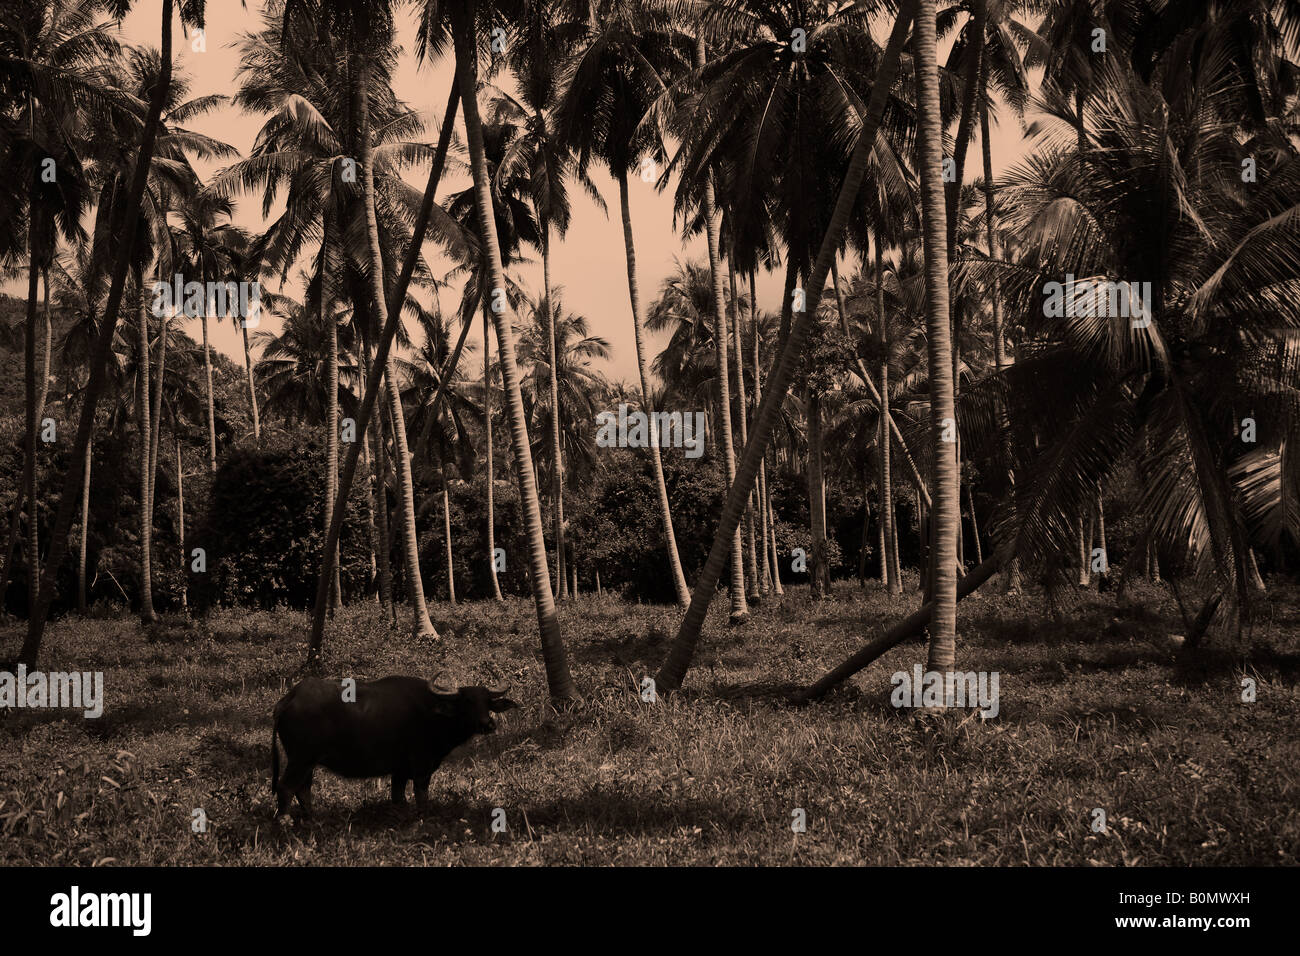 water buffalo amongst coconut tree's koh samui thailand Stock Photo